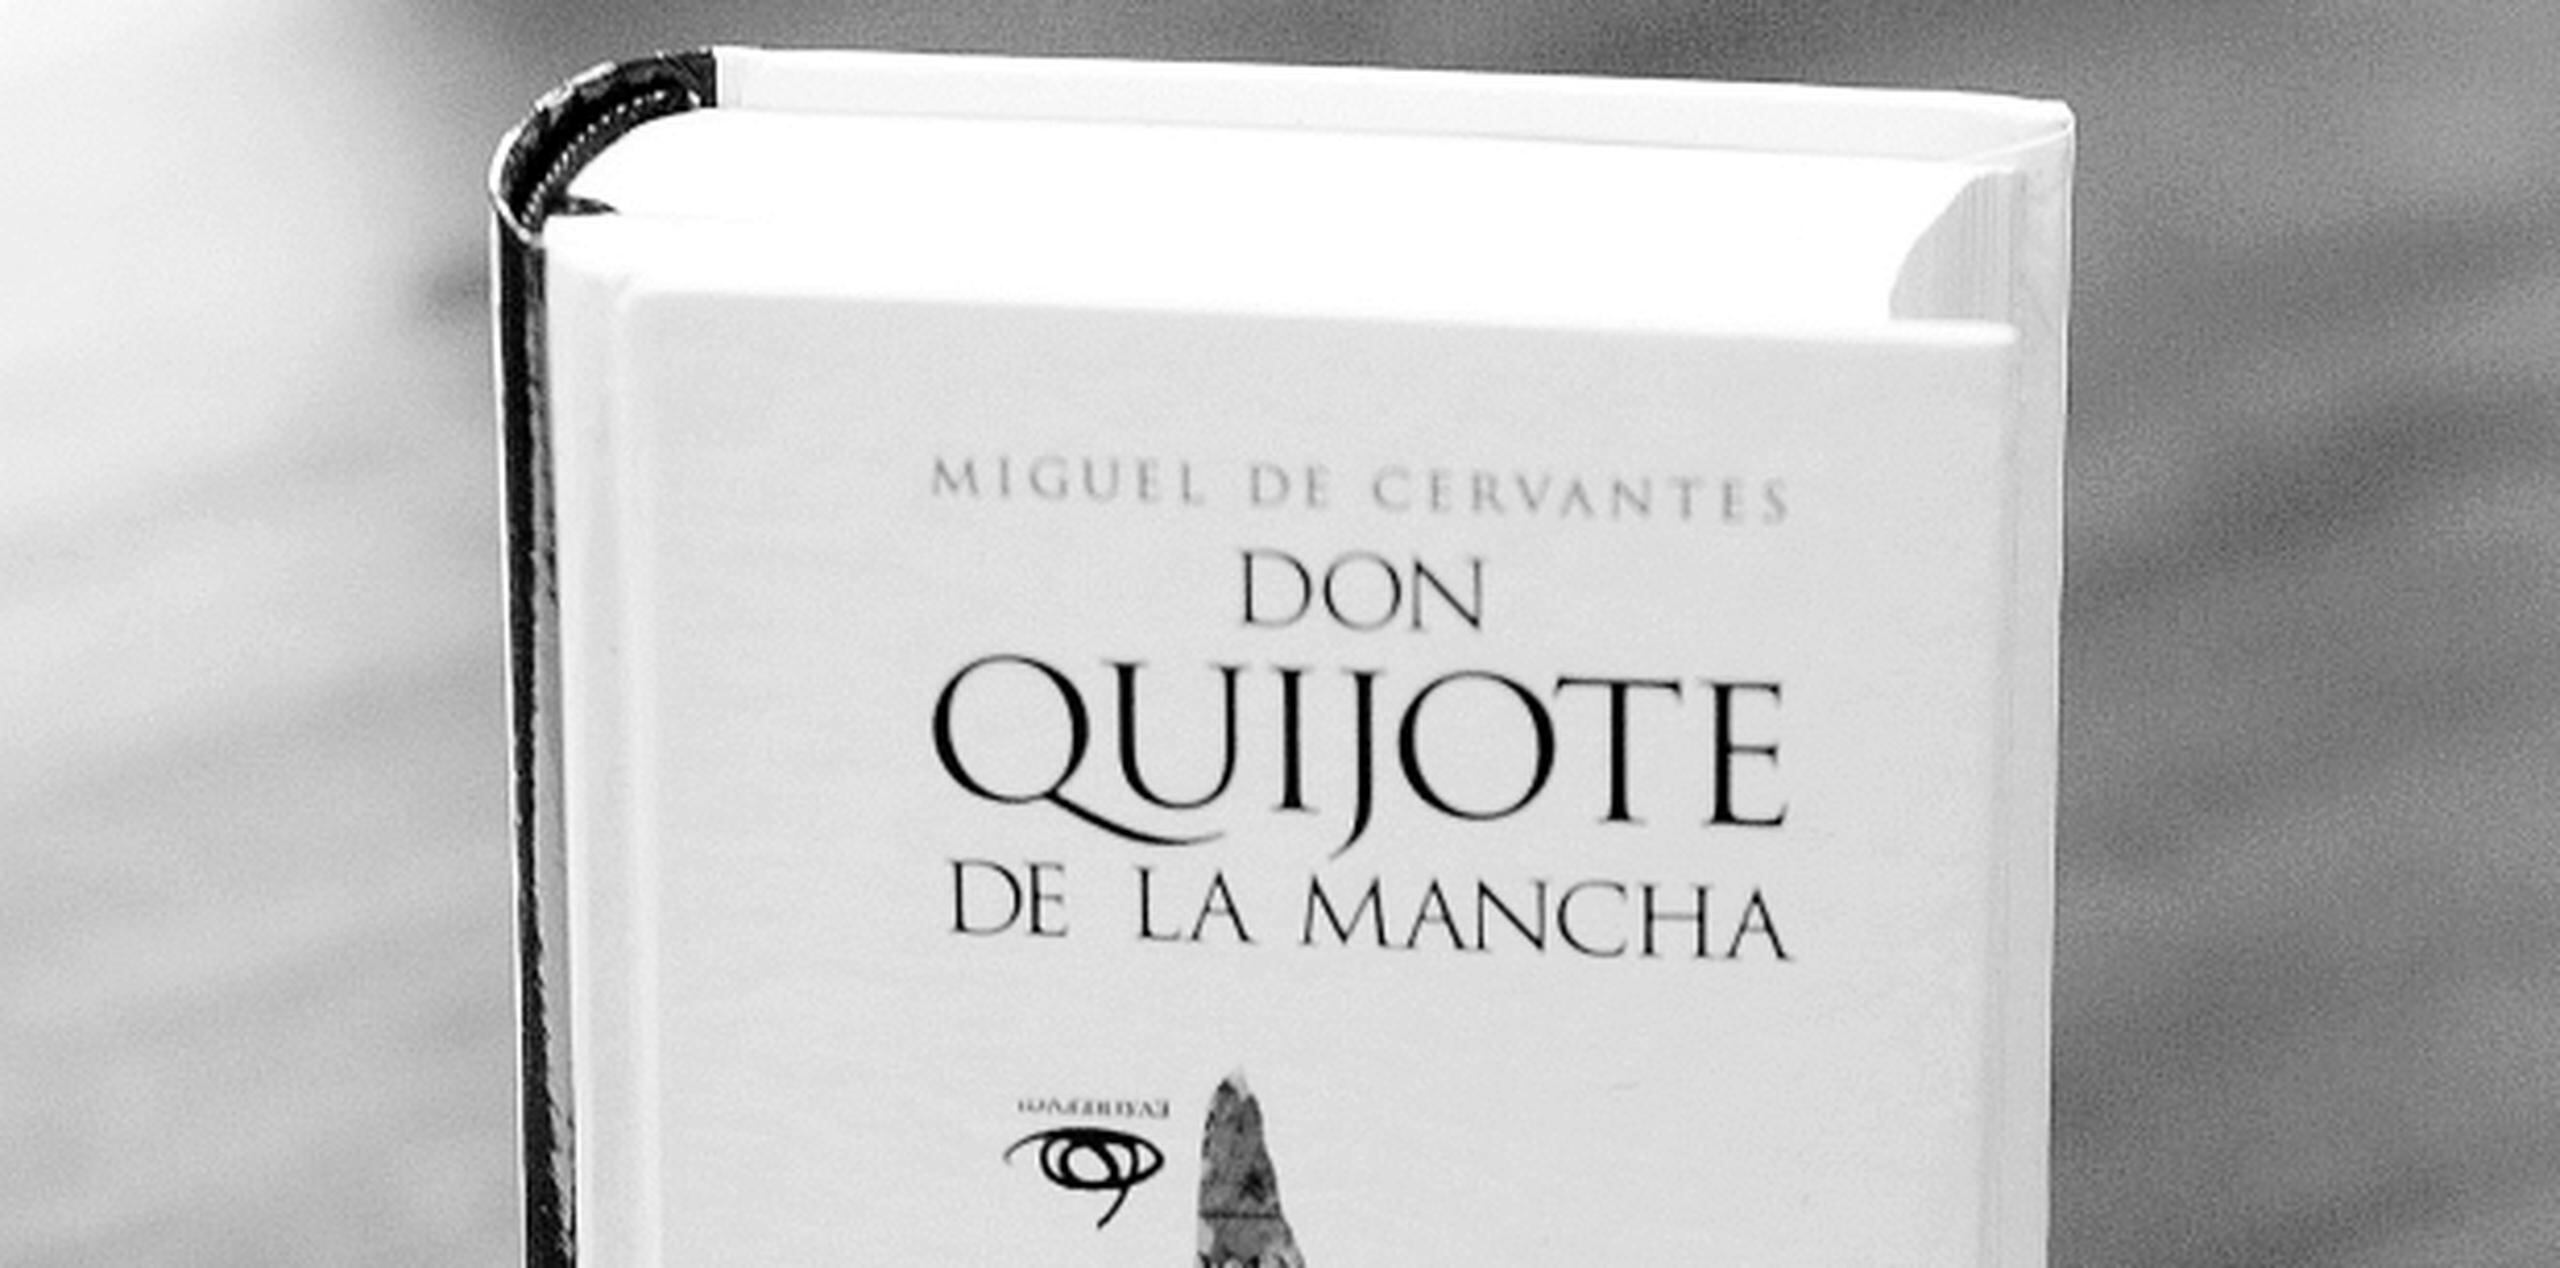 "Don Quijote de la Mancha" es considerada como una obra maestra de la narrativa universal. (Archivo)